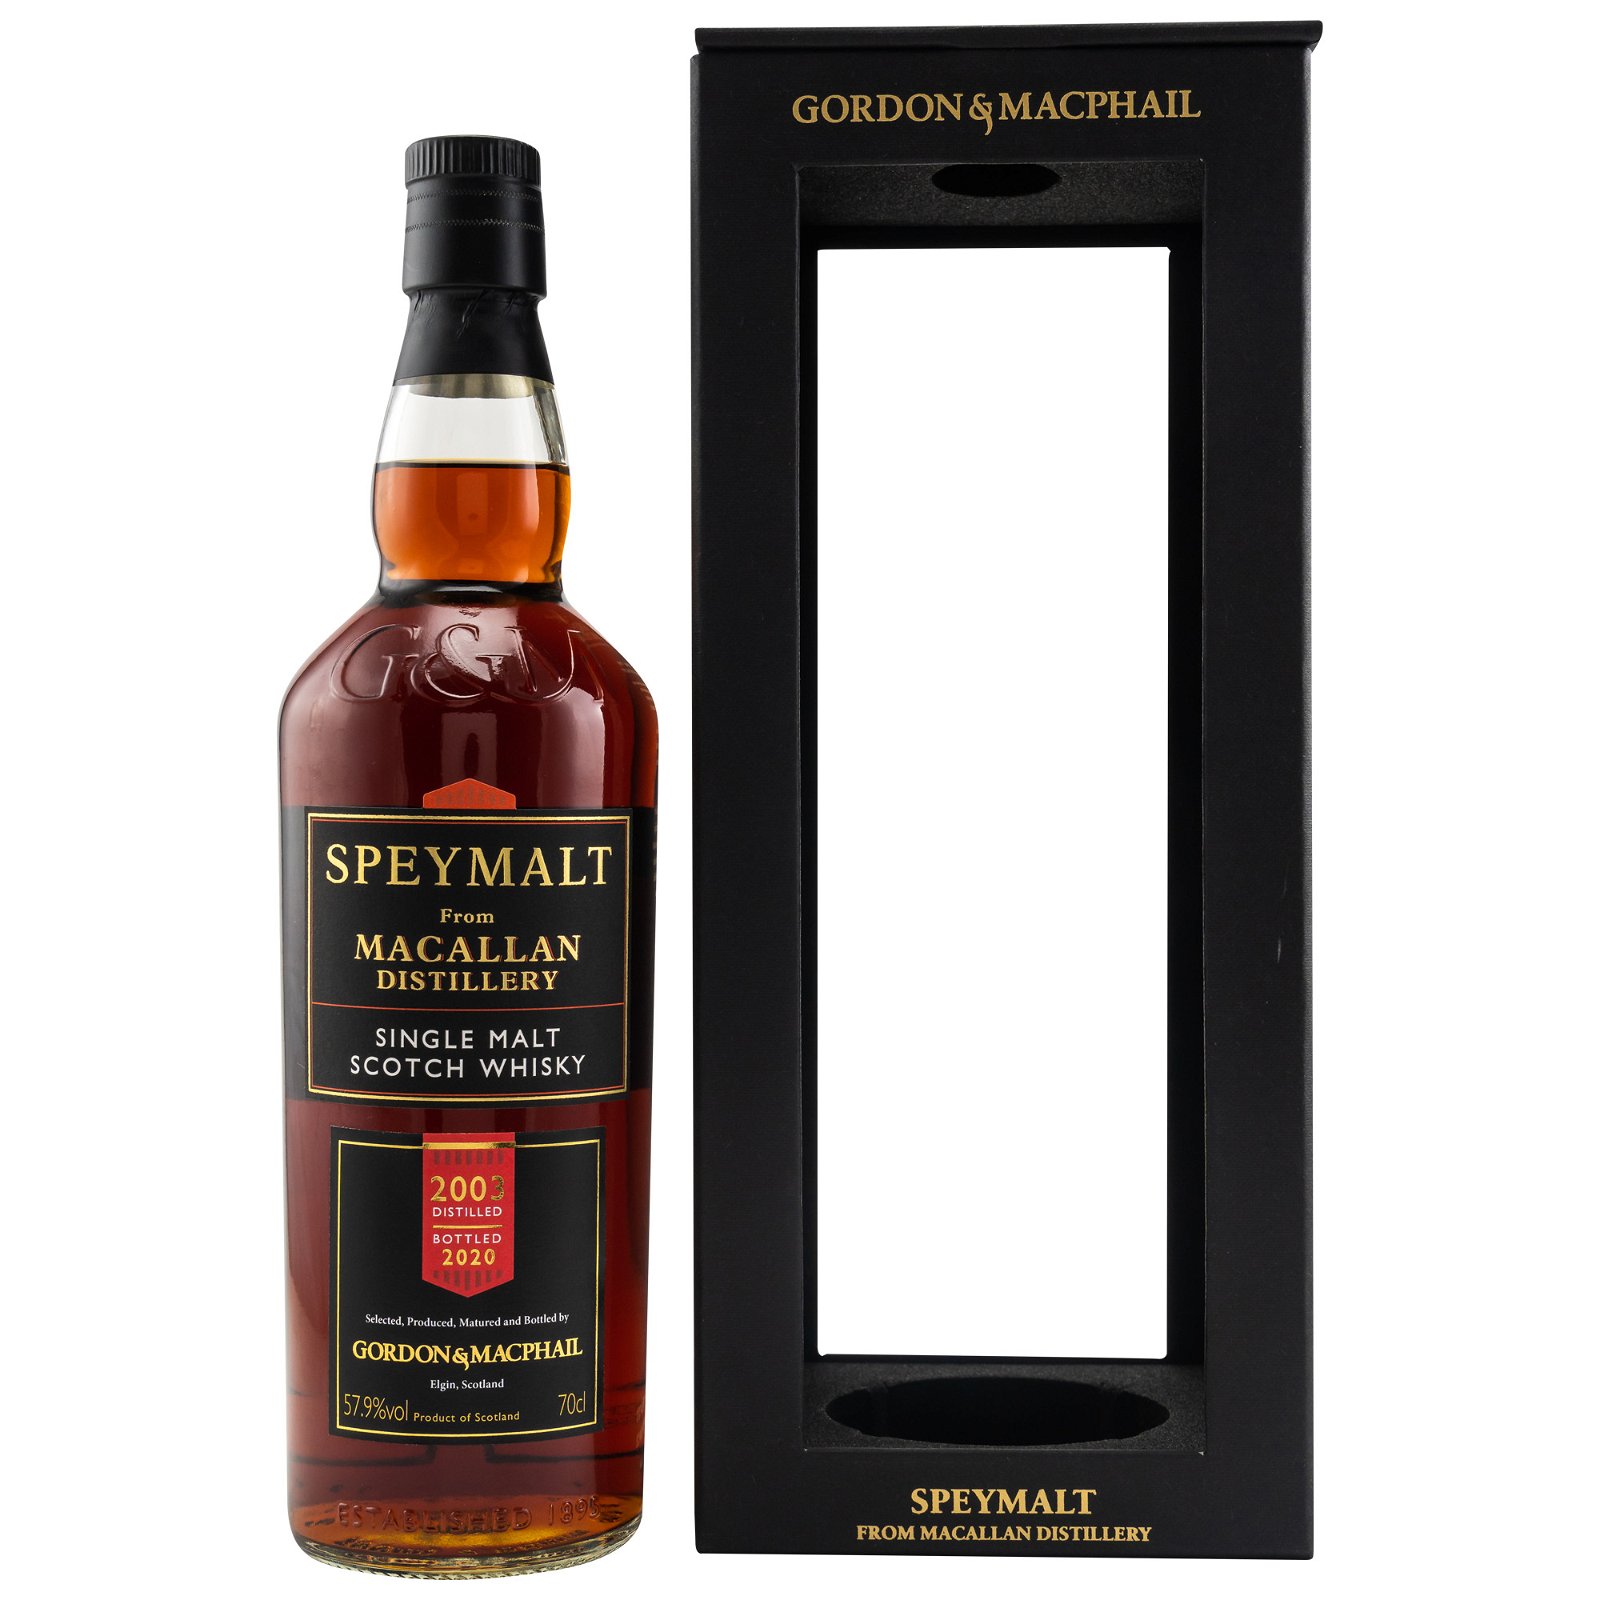 Gordon & Macphail 17 Jahre Speymalt Macallan Distillery 03/20 Cask Strength Scotch Whisky 